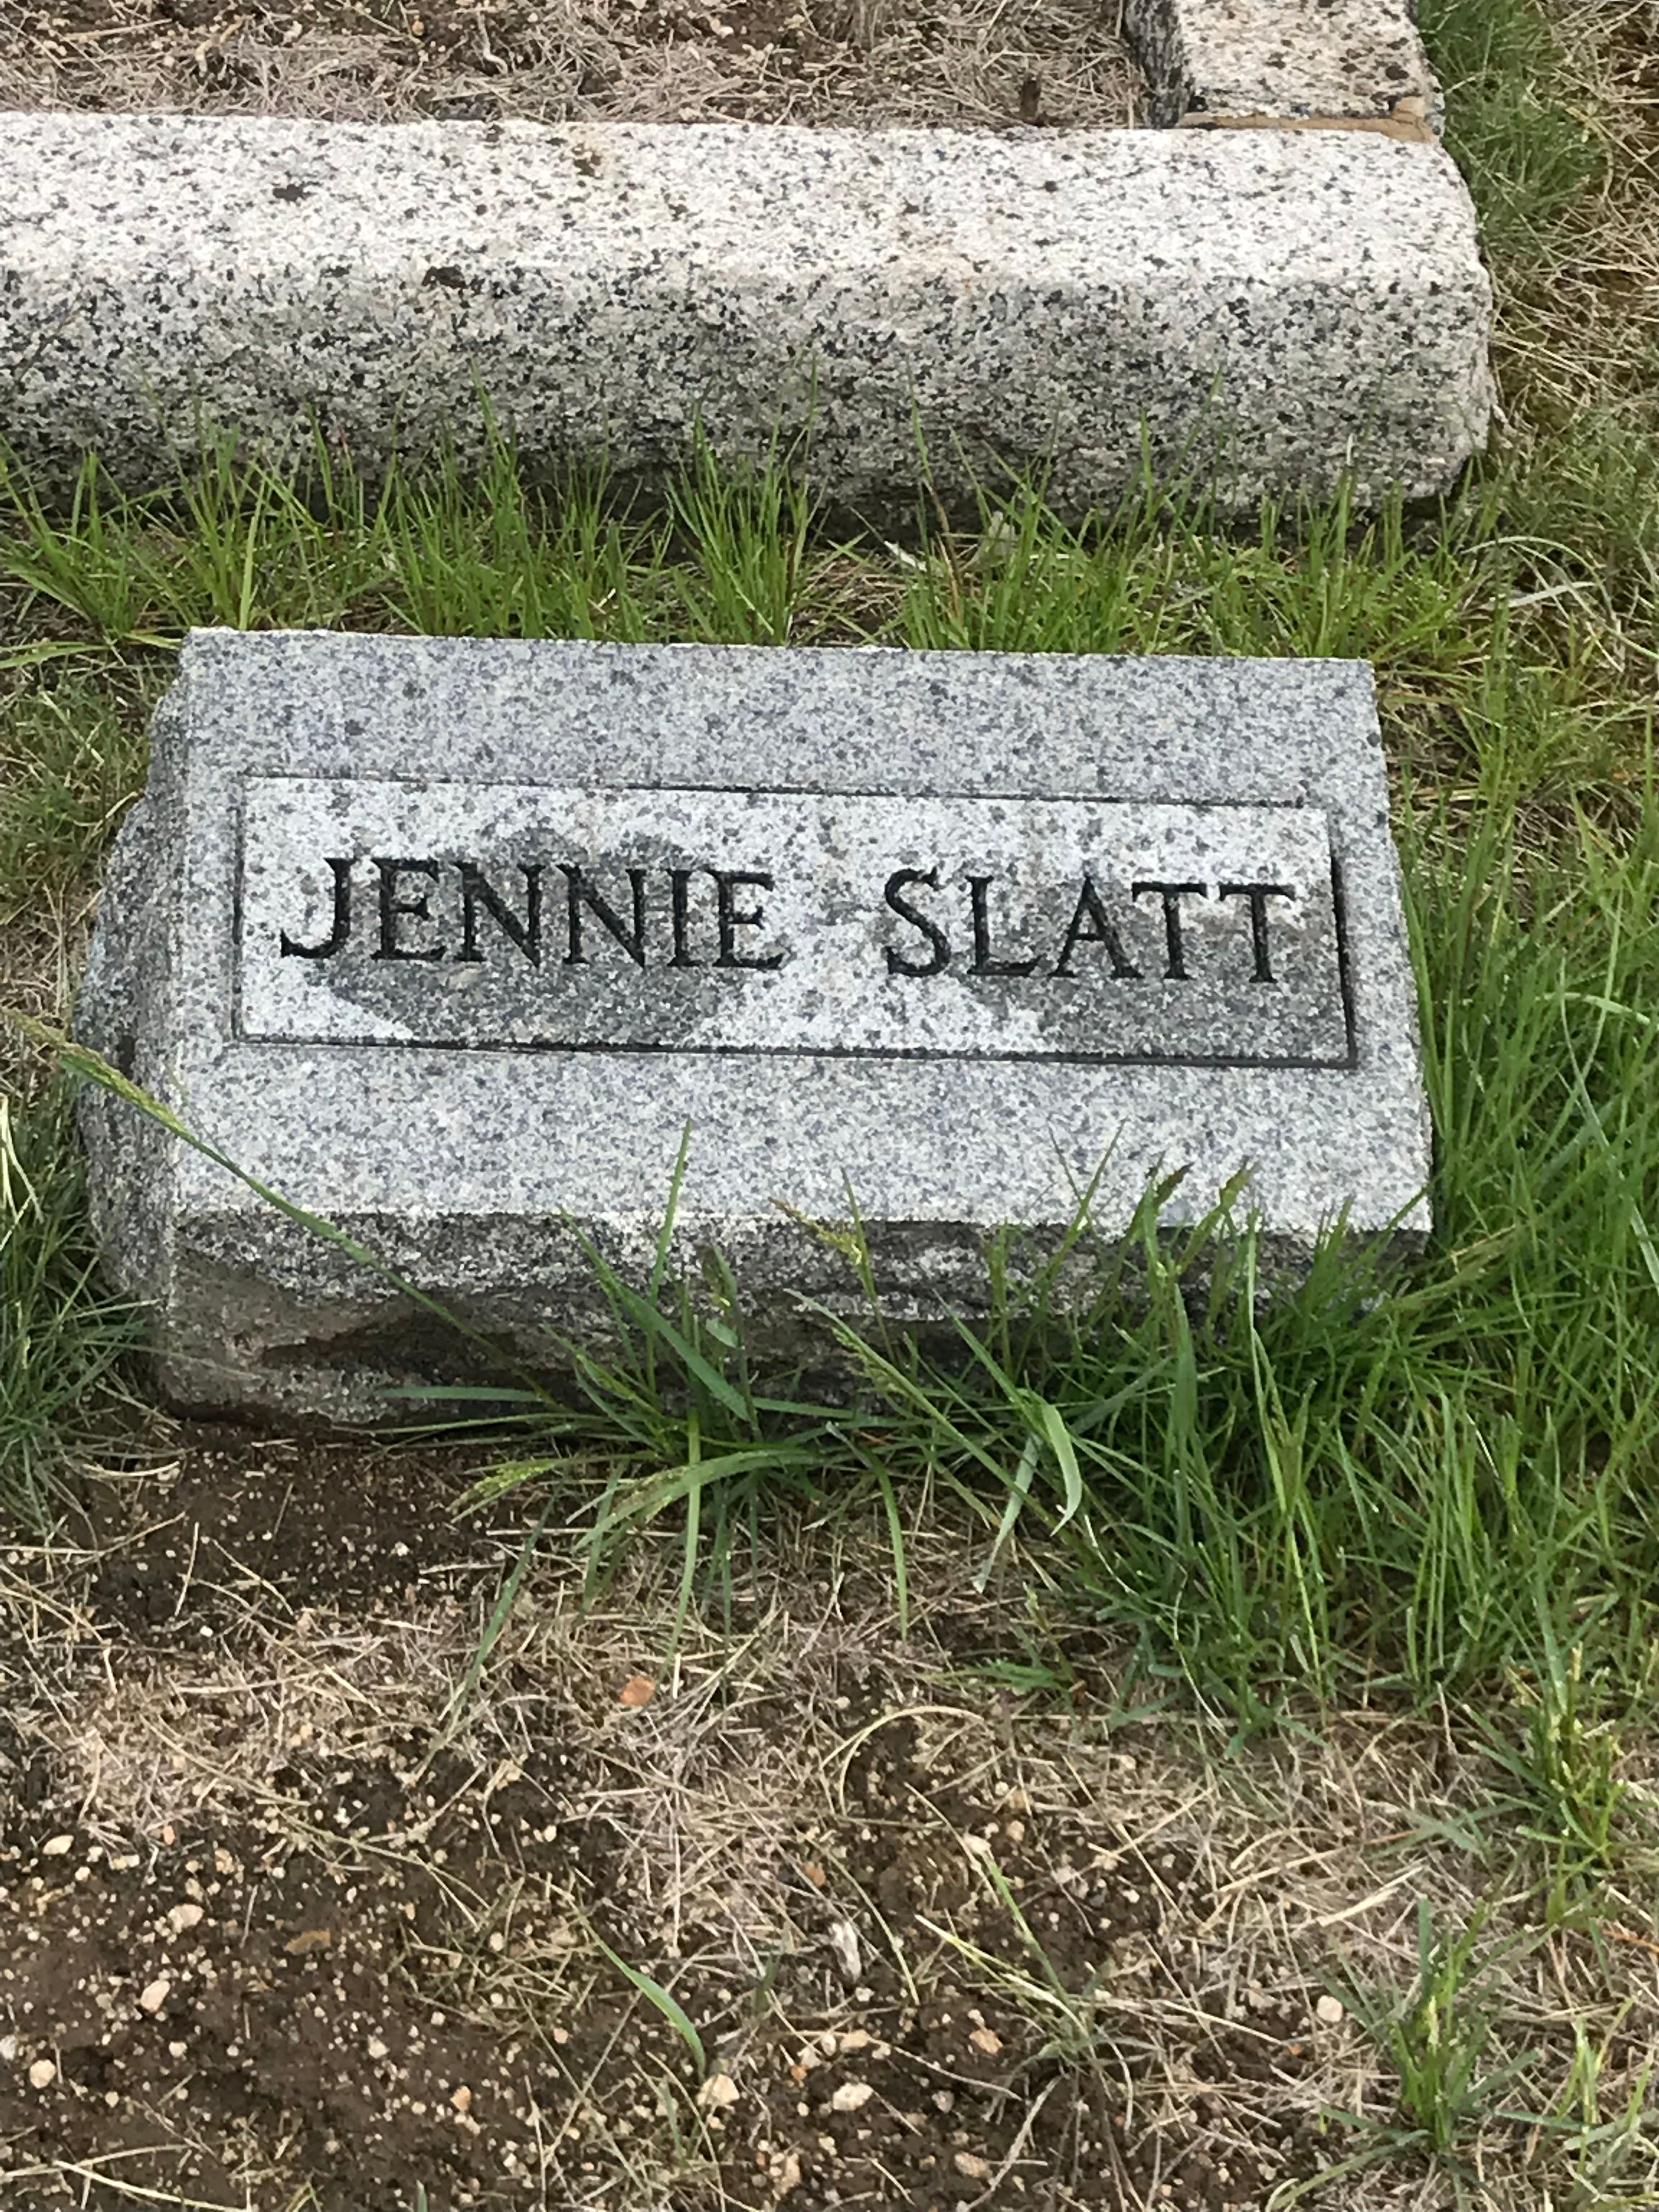 Jenny slatt